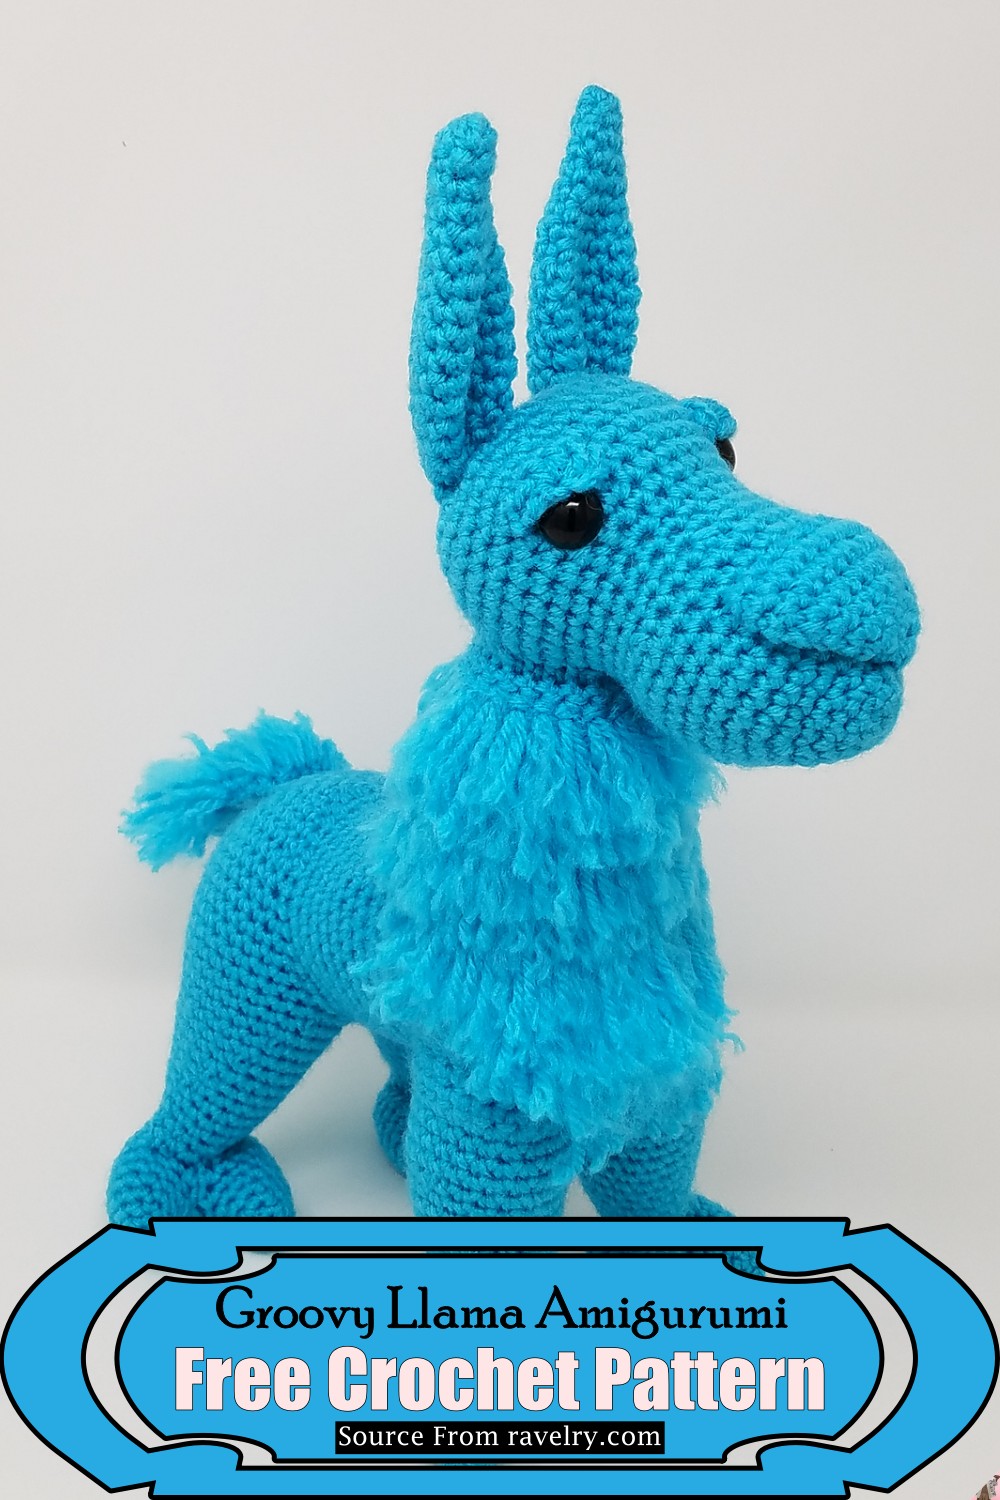 Crochet Groovy Llama Amigurumi Pattern